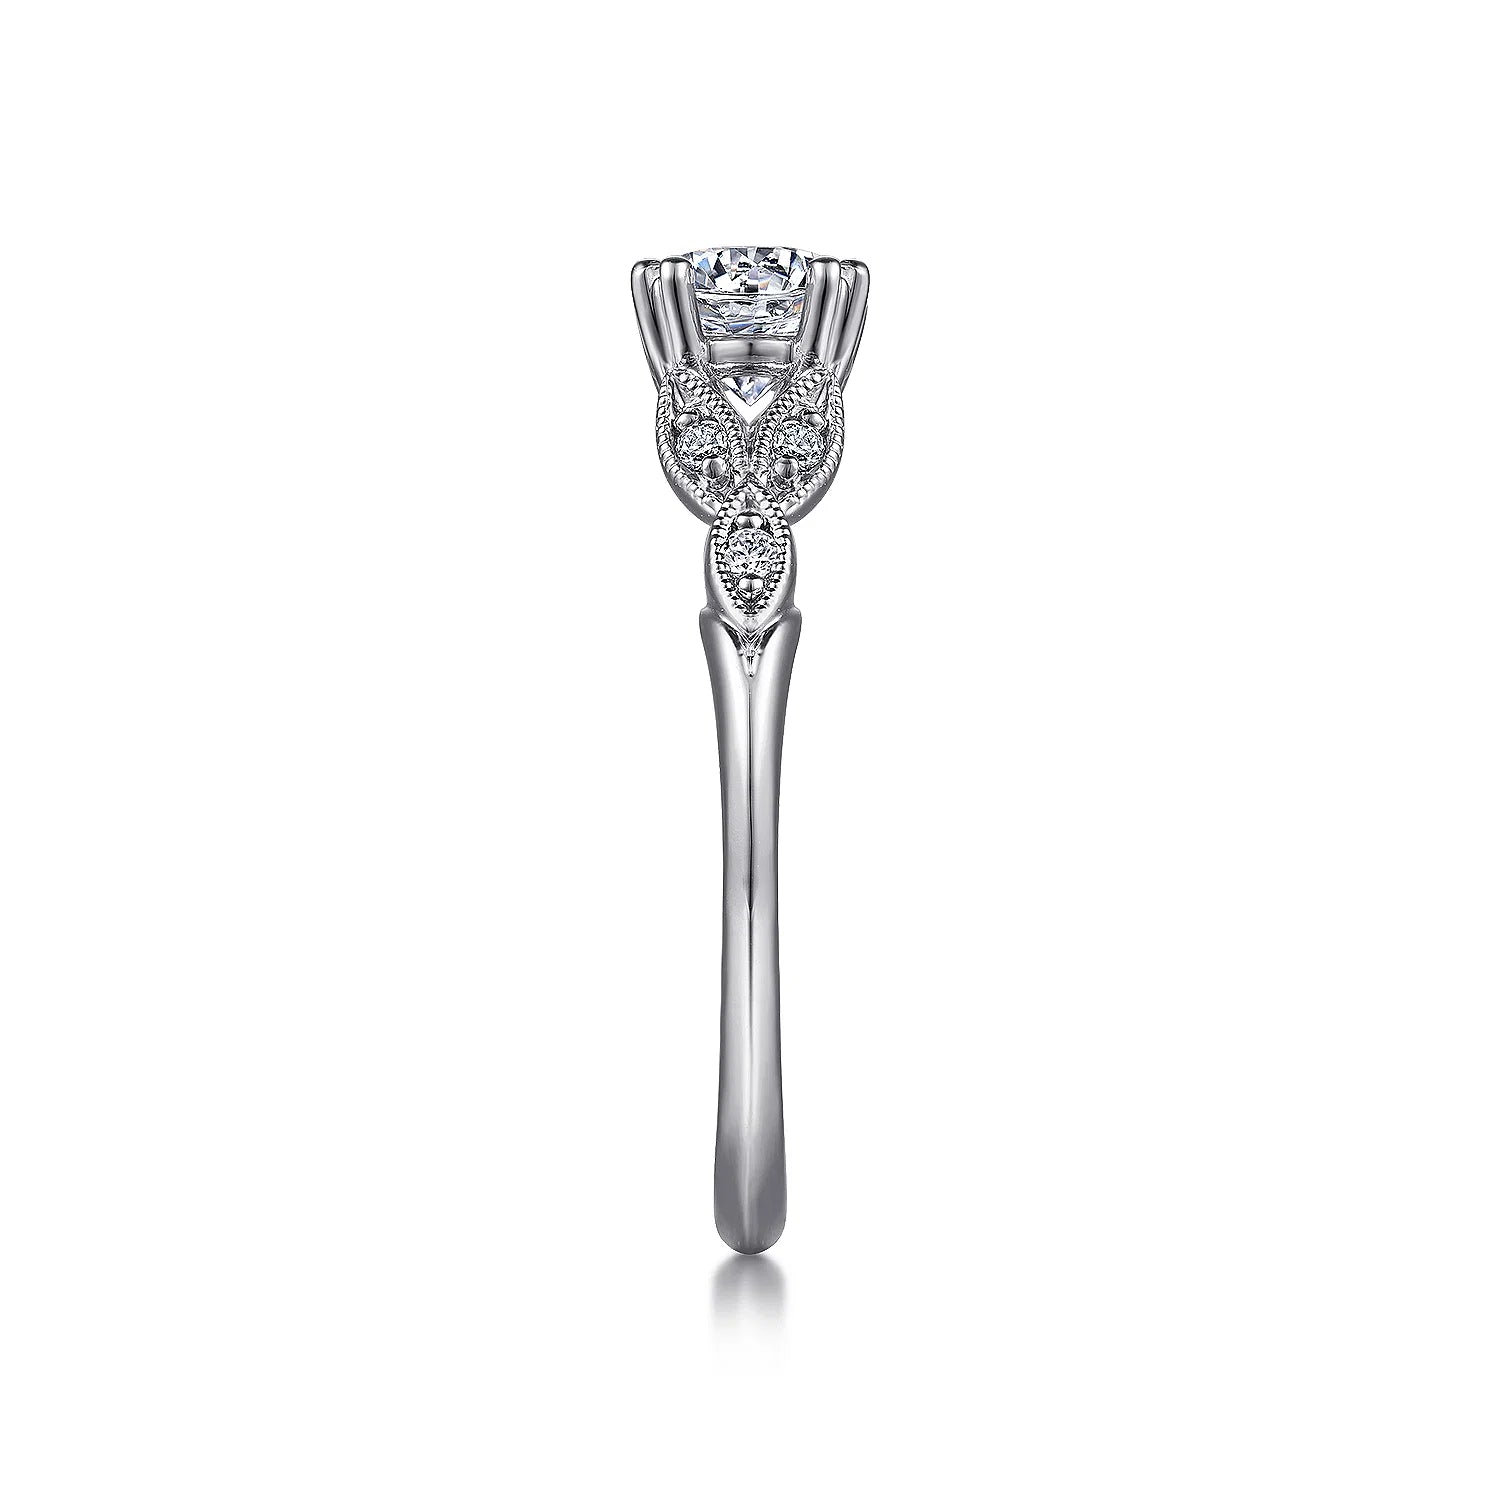 Gabriel & Co. - Celia - 14K White Gold Round Diamond Engagement Ring - Diamond Semi-Mount Rings